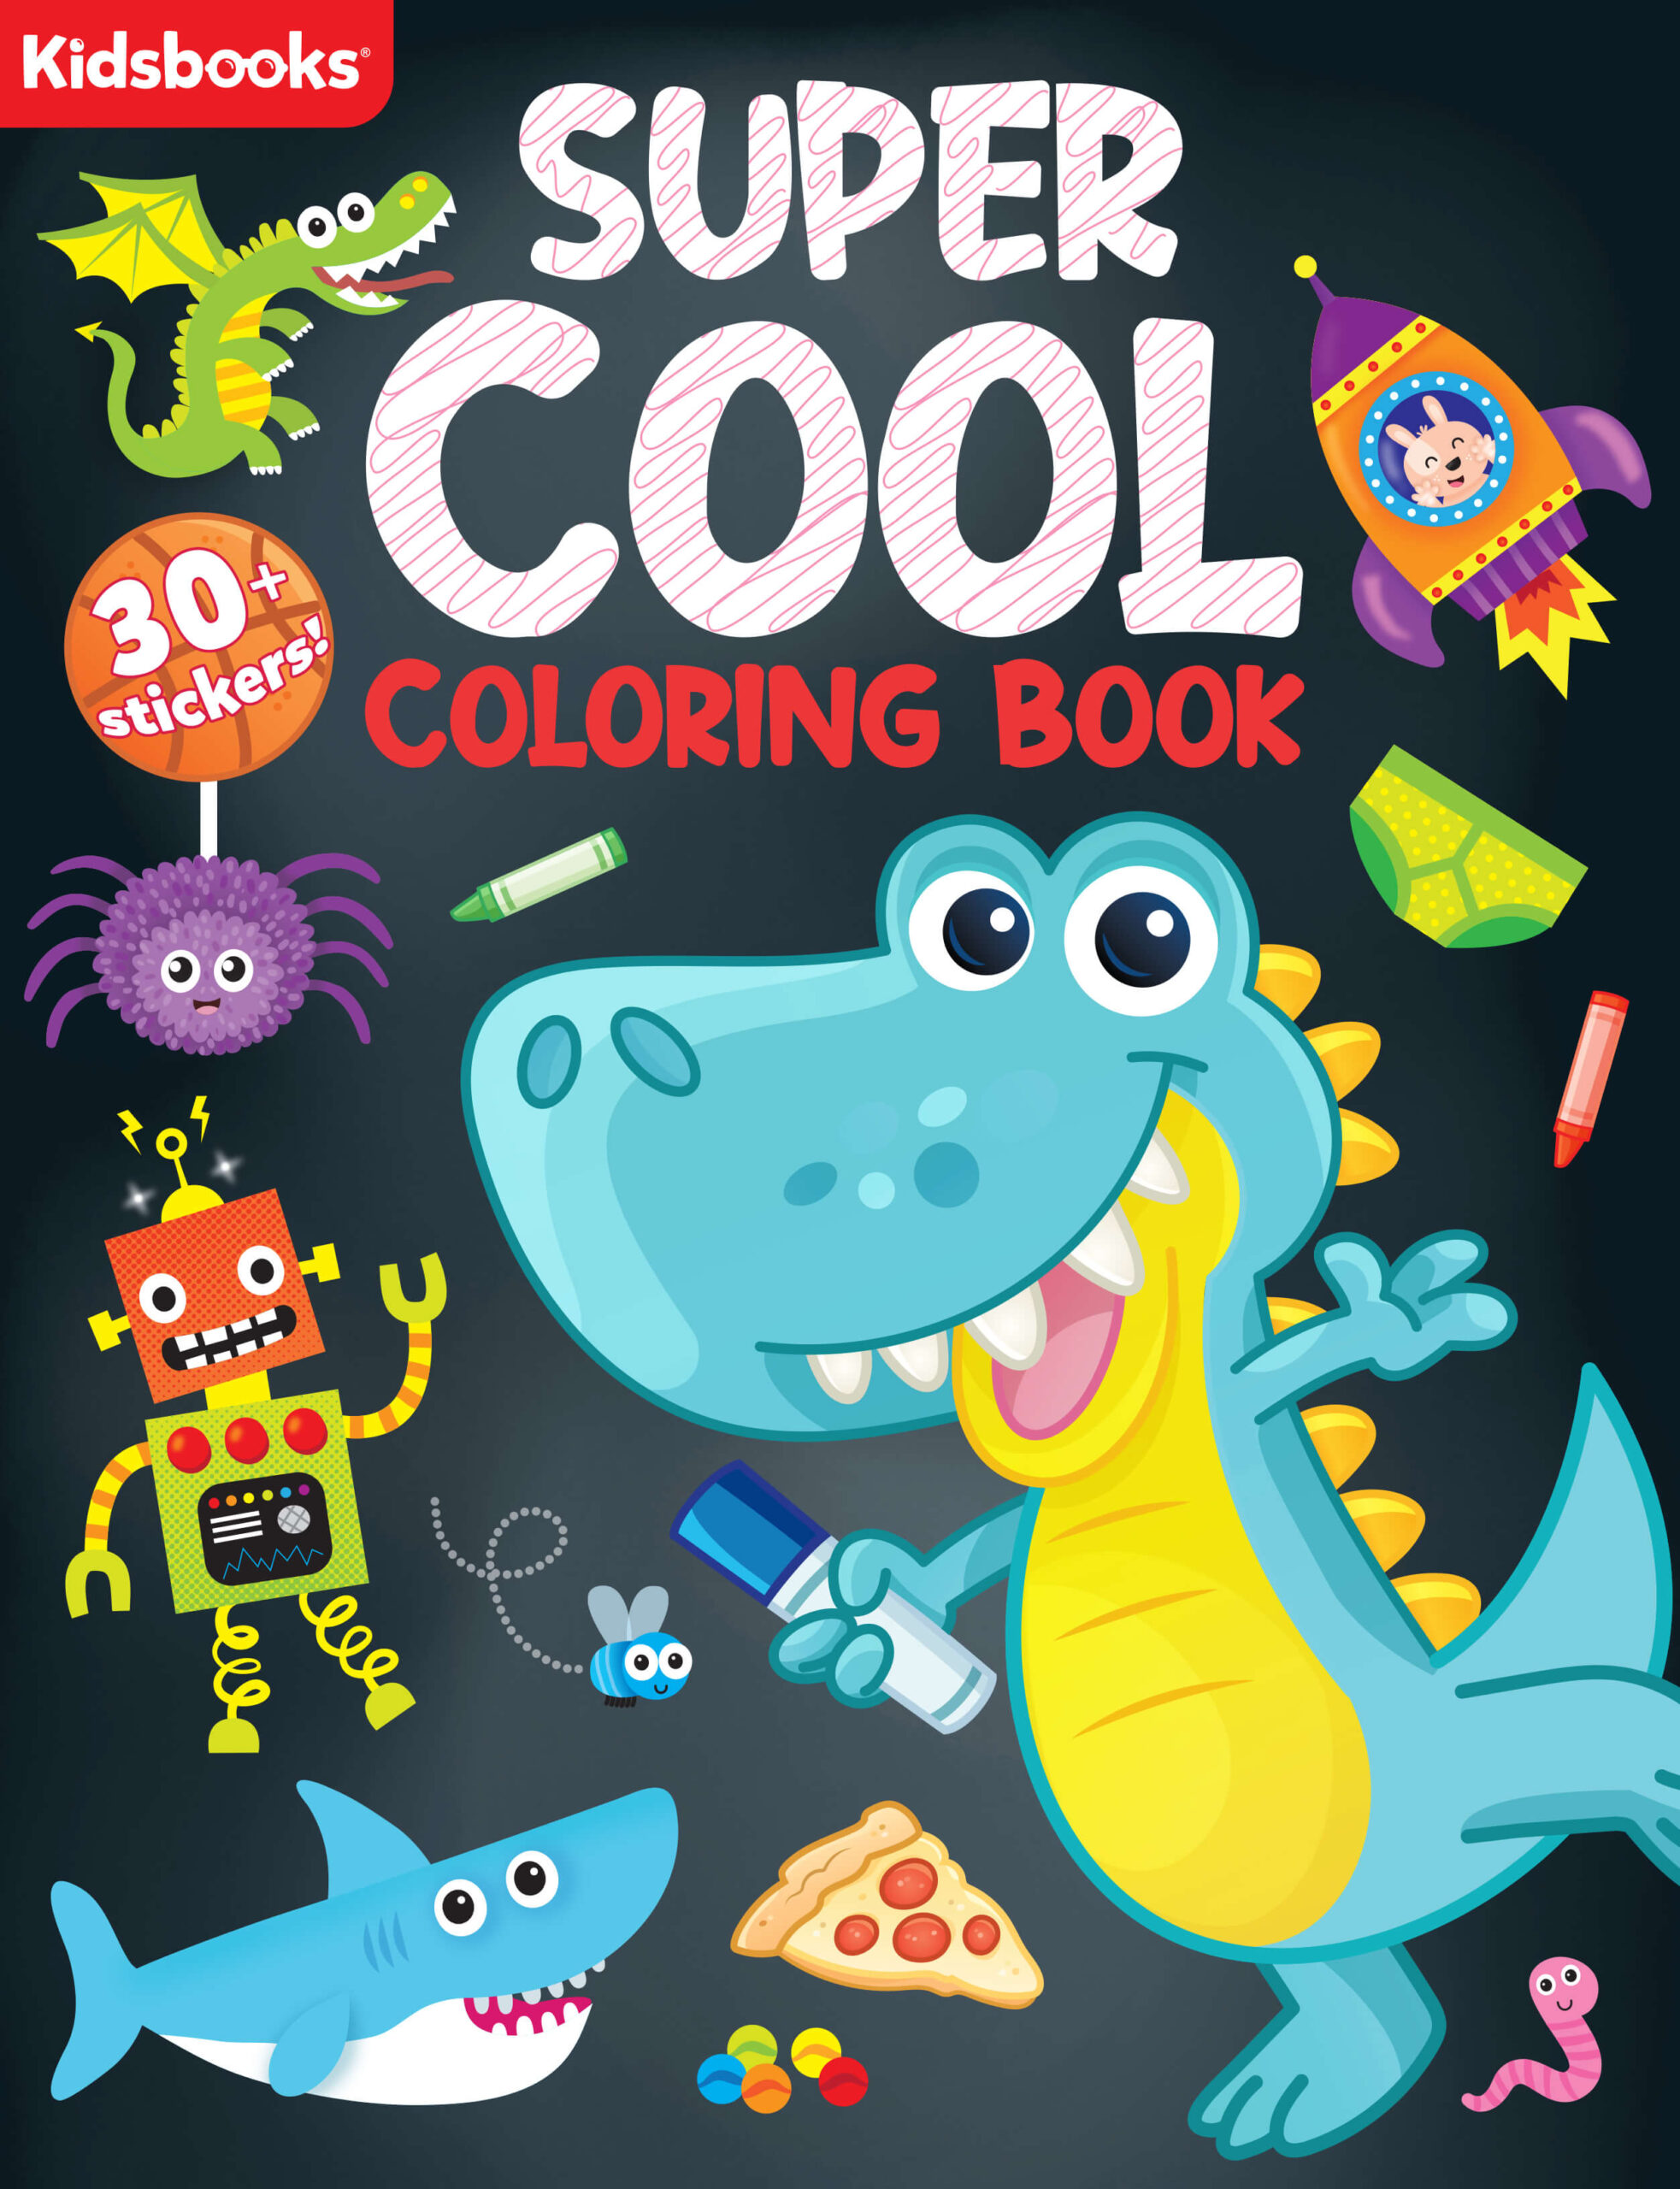 Super Cool Coloring Book